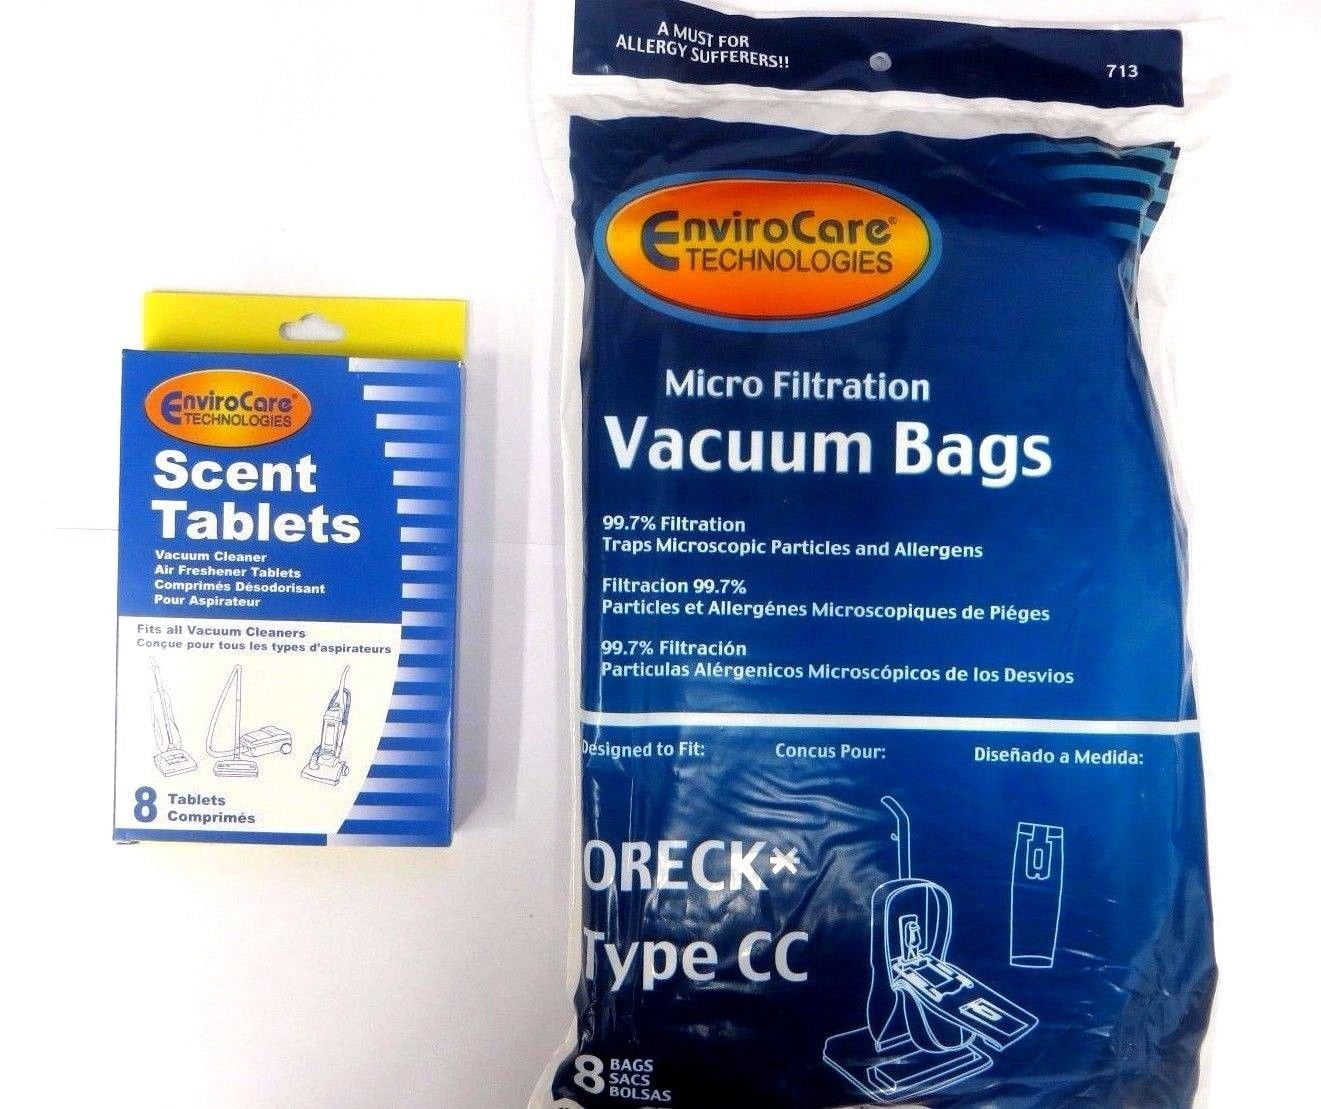 8 Bags Envirocare Oreck XL Vacuum Cleaner bags w/ Belt 